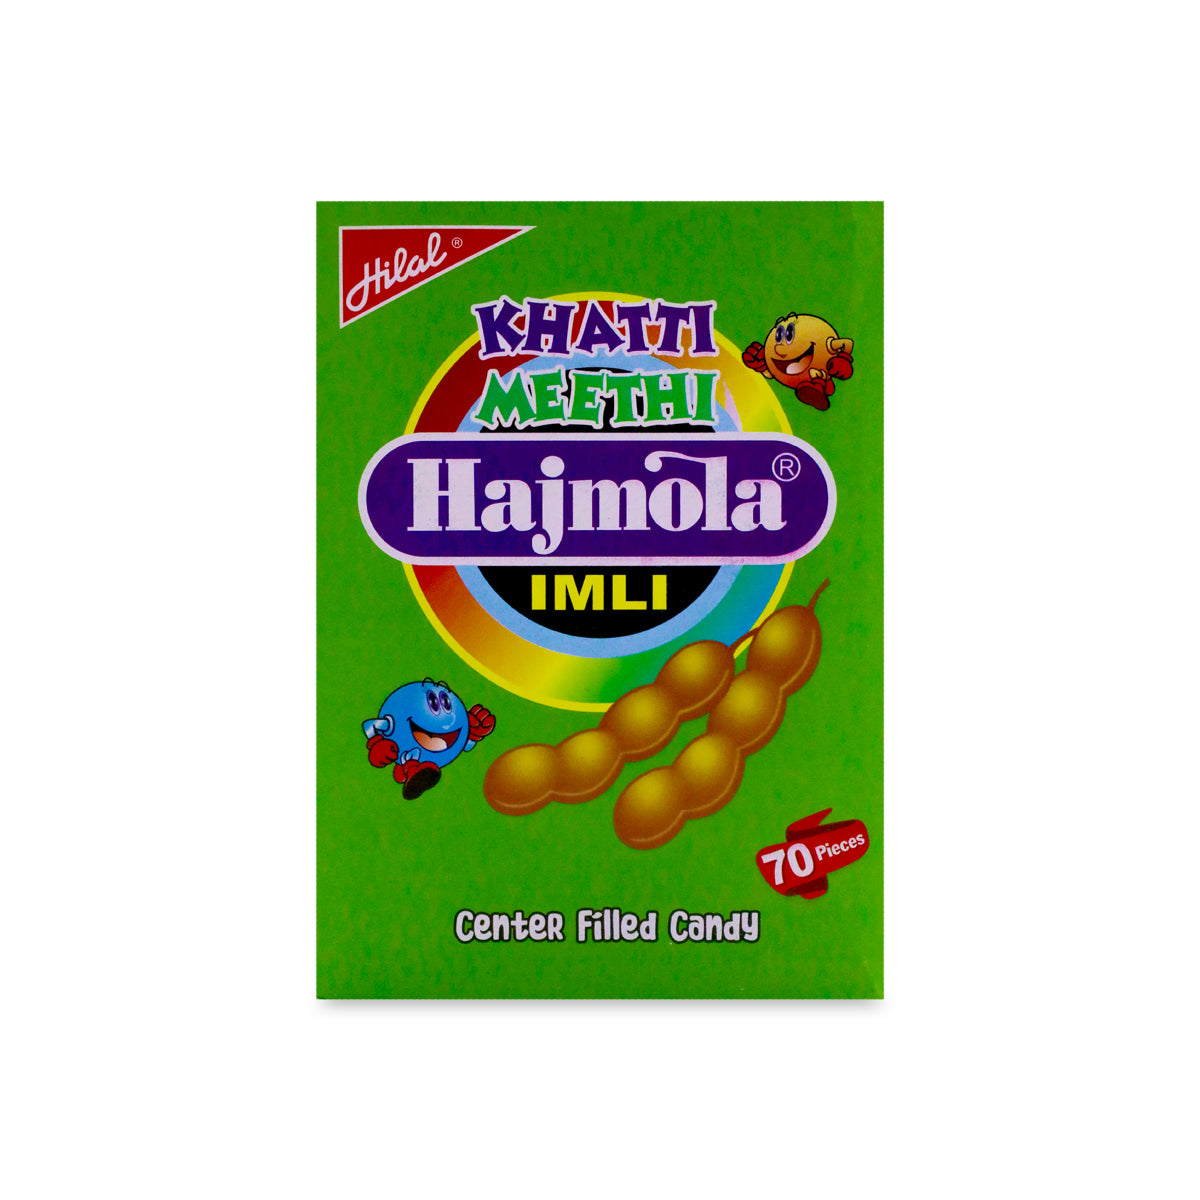 Hilal Hajmola Imli Candy 70Pcs Box